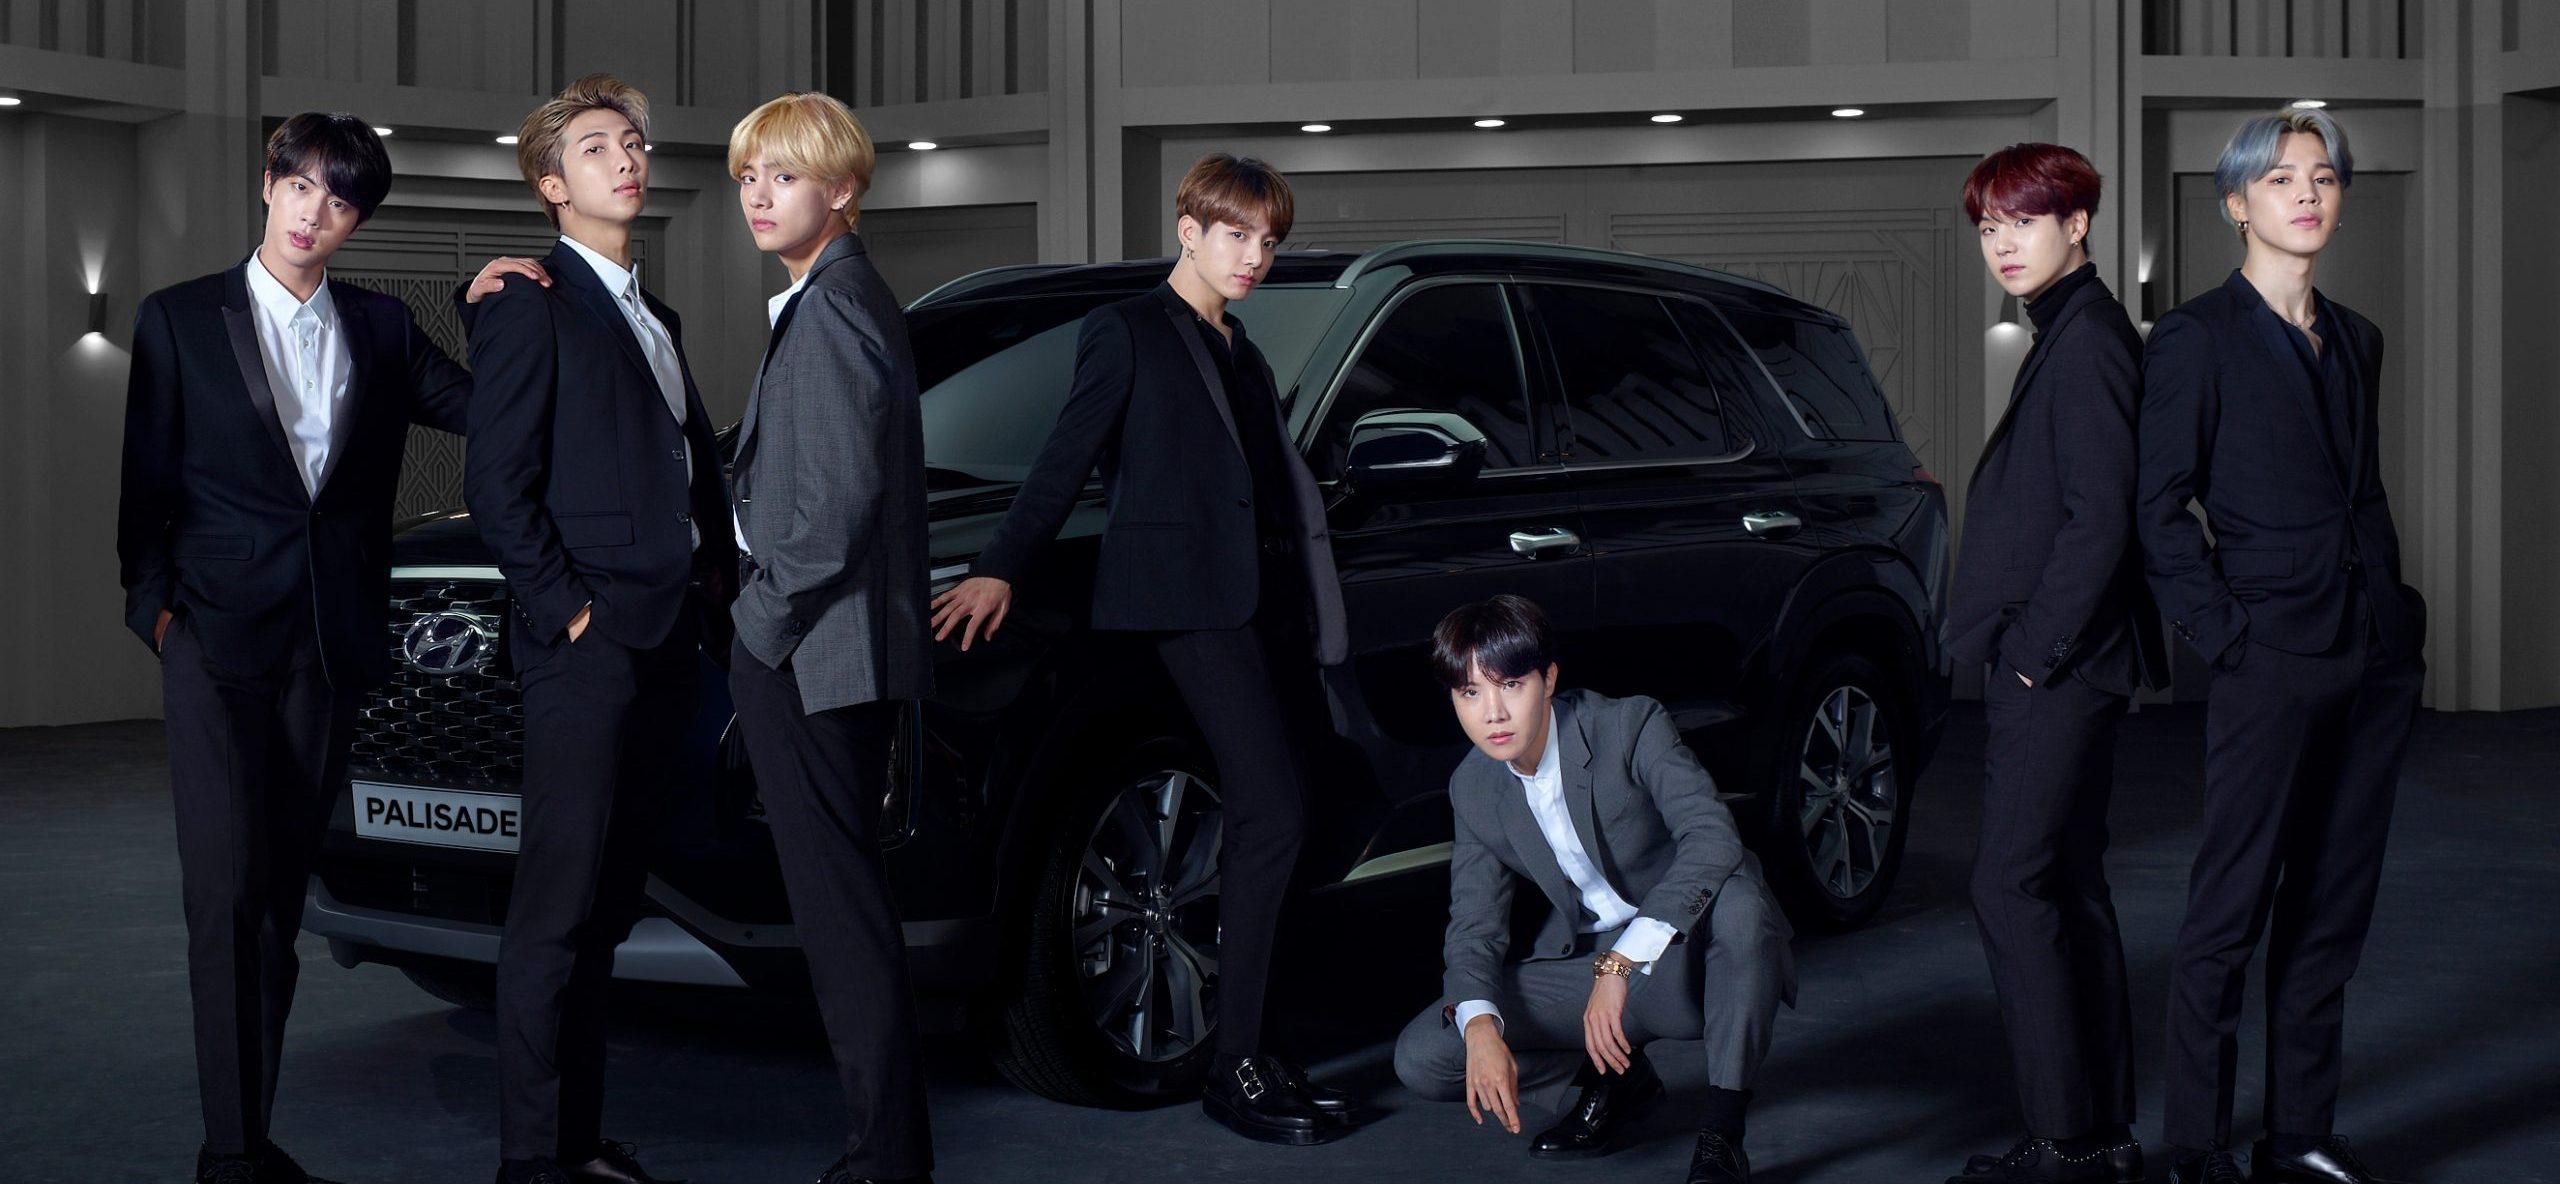 South Korean boyband BTS team up with Hyundai